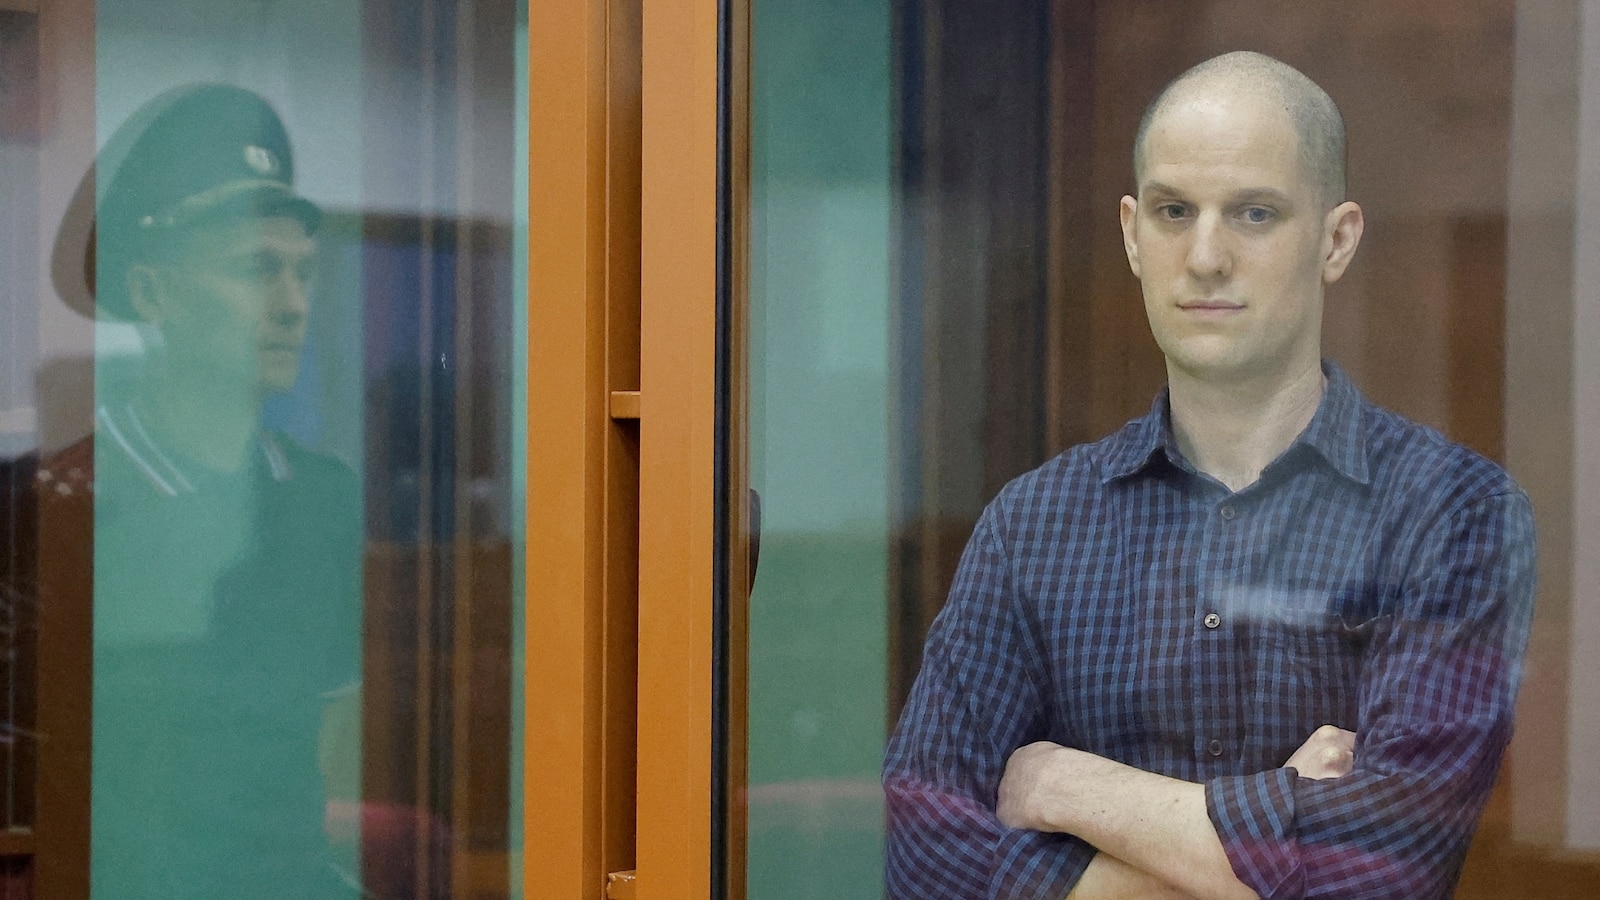 American reporter Evan Gershkovich arrives in Russian court for secret espionage trial